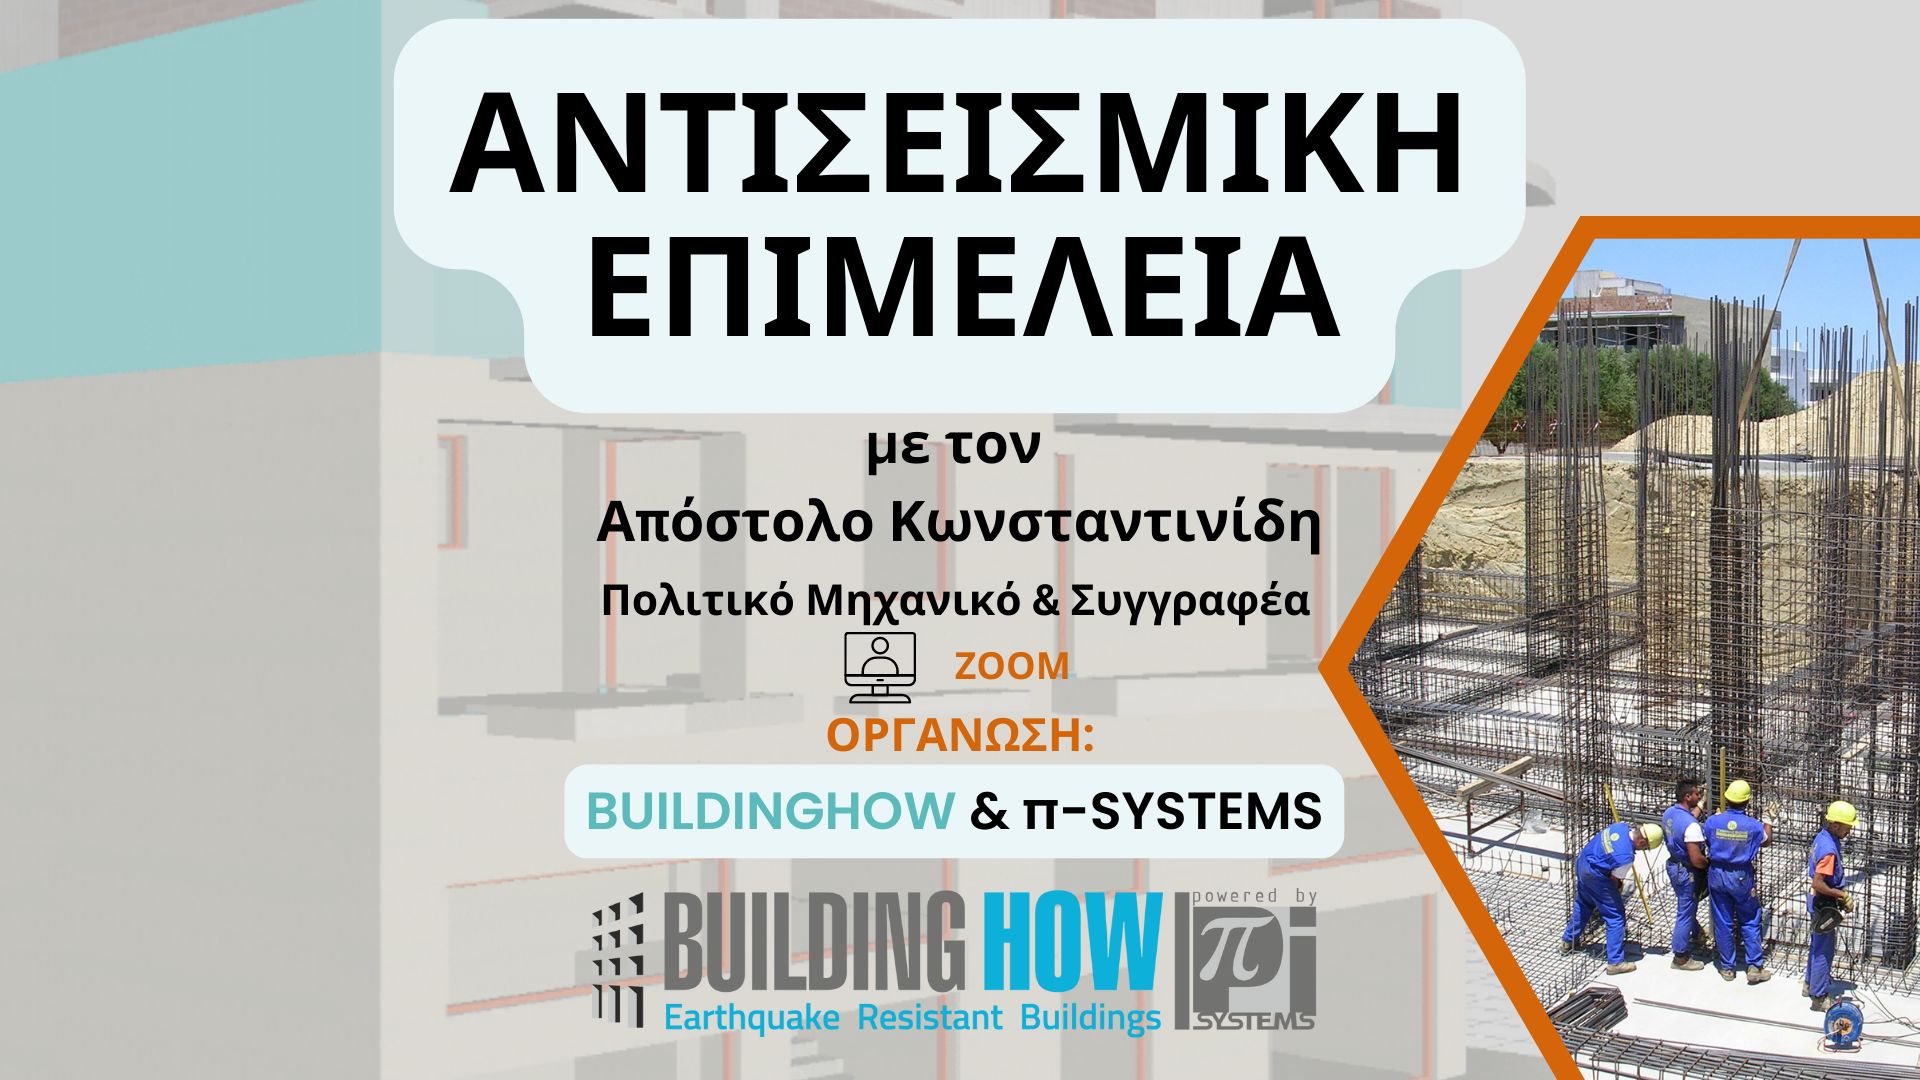 More information about "Michanikos.gr webTV: Προβολή του webinar "Αντισεισμική Επιμέλεια" με τον Απόστολο Κωνσταντινίδη"